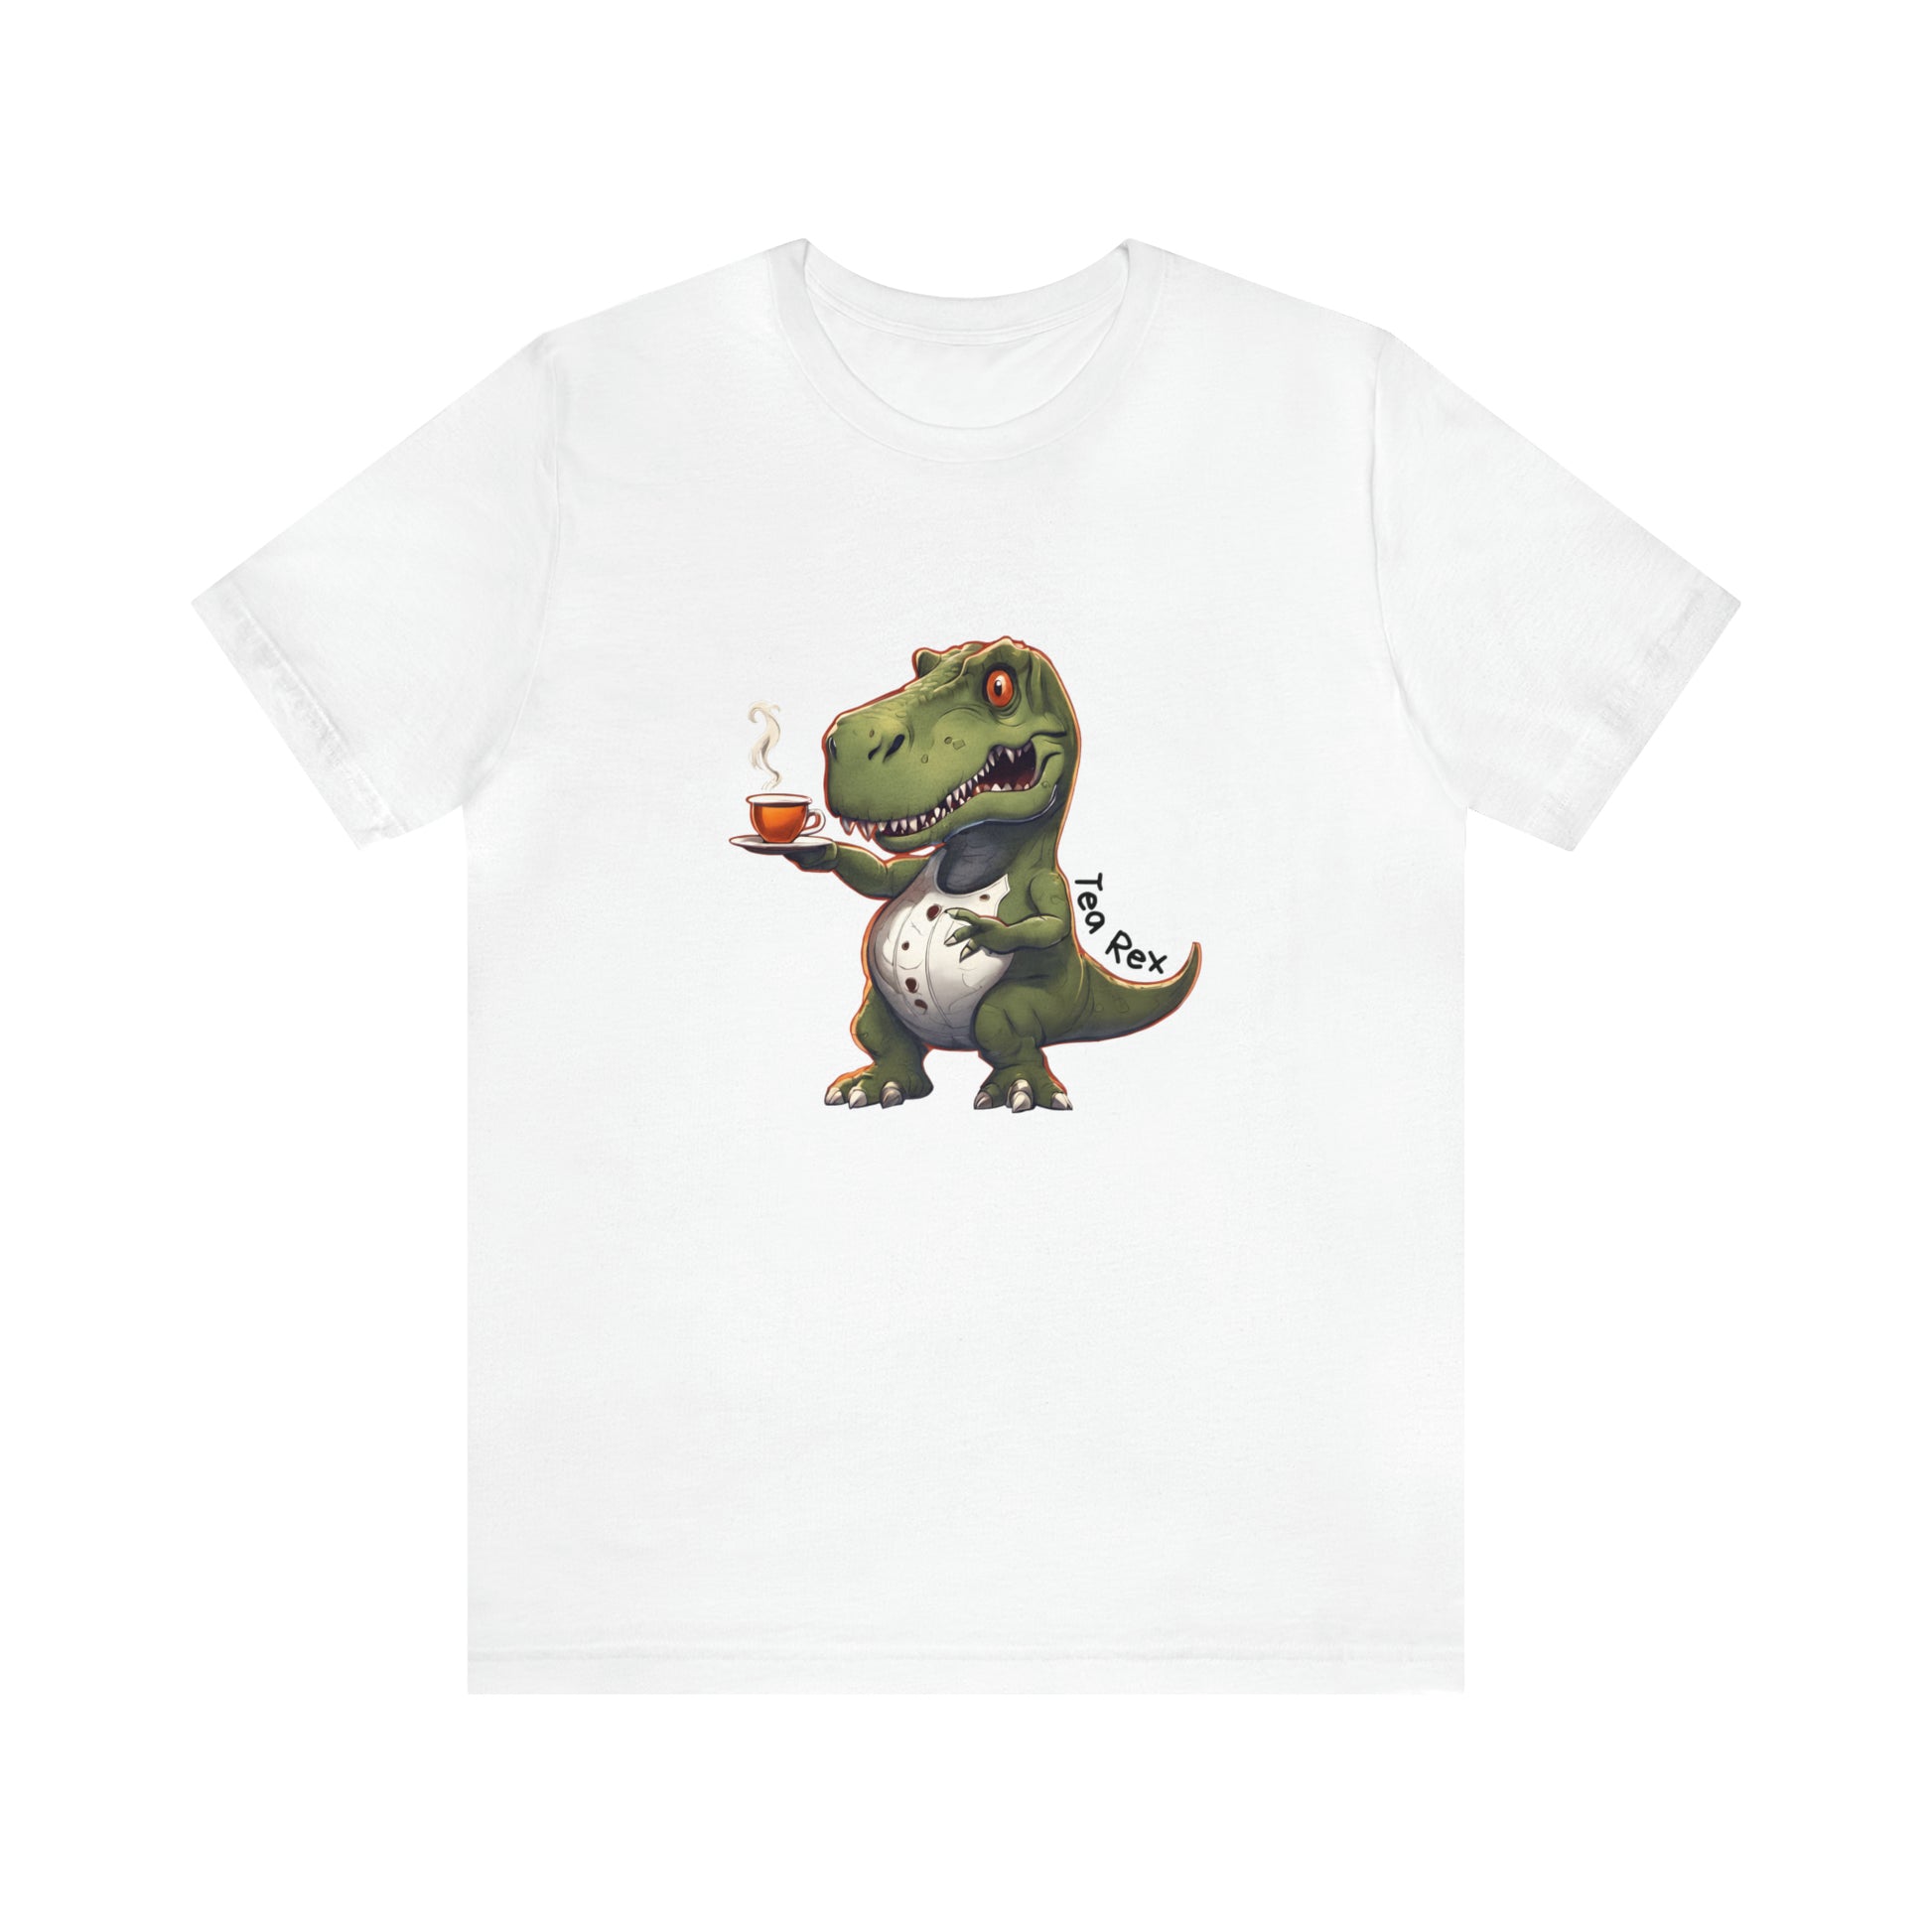 Tea Rex & T-rex dinosaur Unisex short sleeve T-Shirt with Ultra soft-cotton white